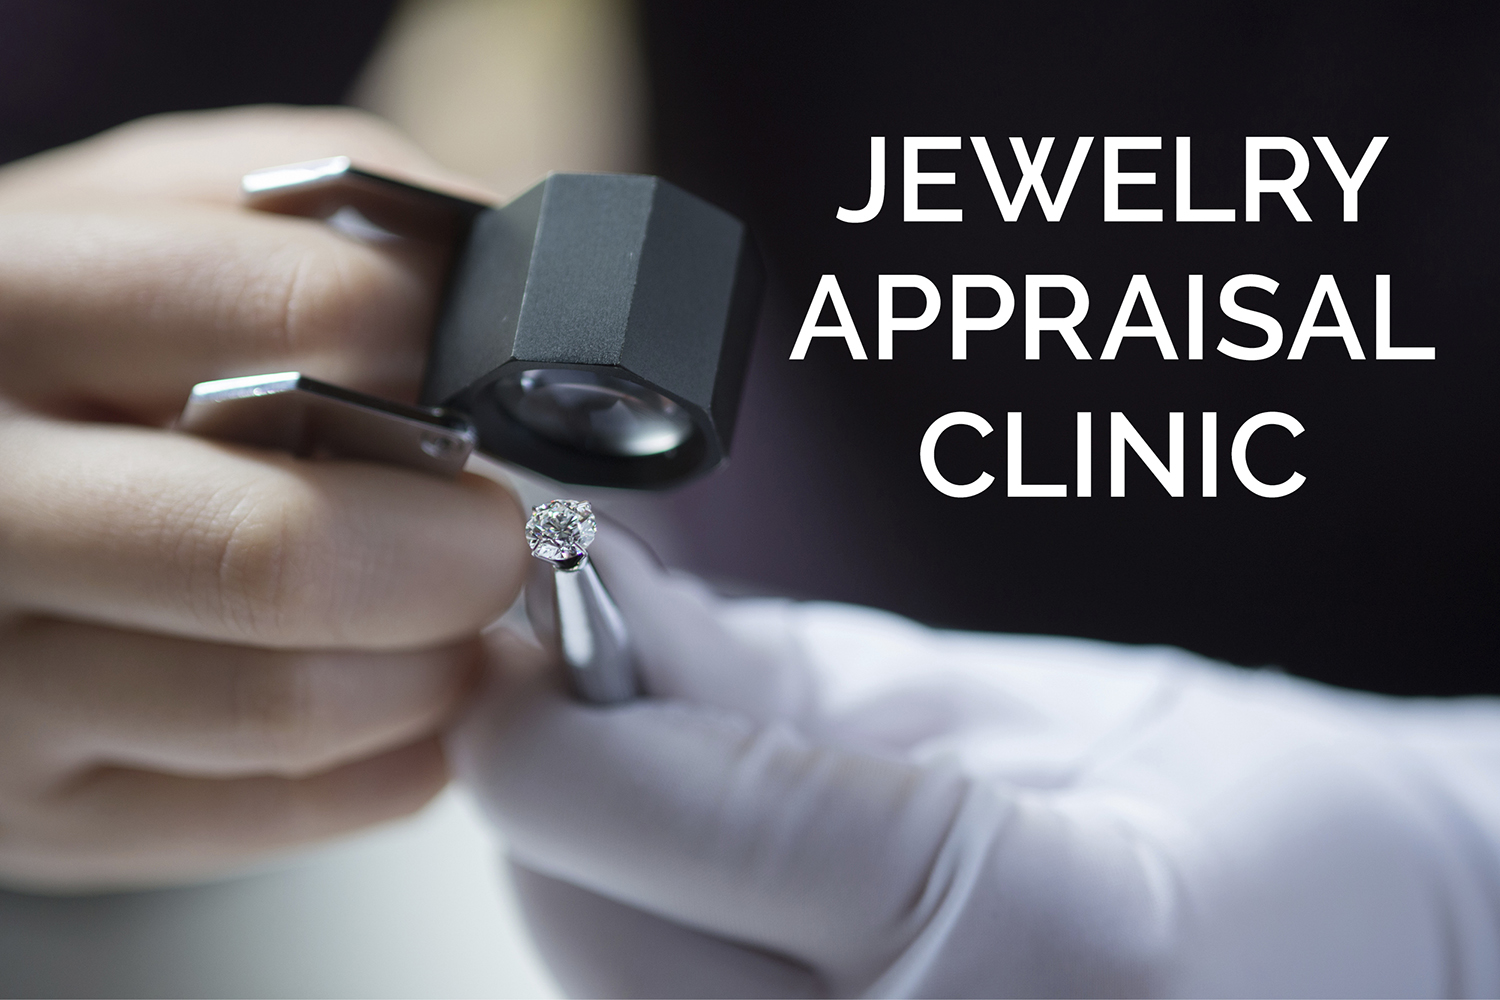 Jewelry Appraisal Clinic in Winston-Salem